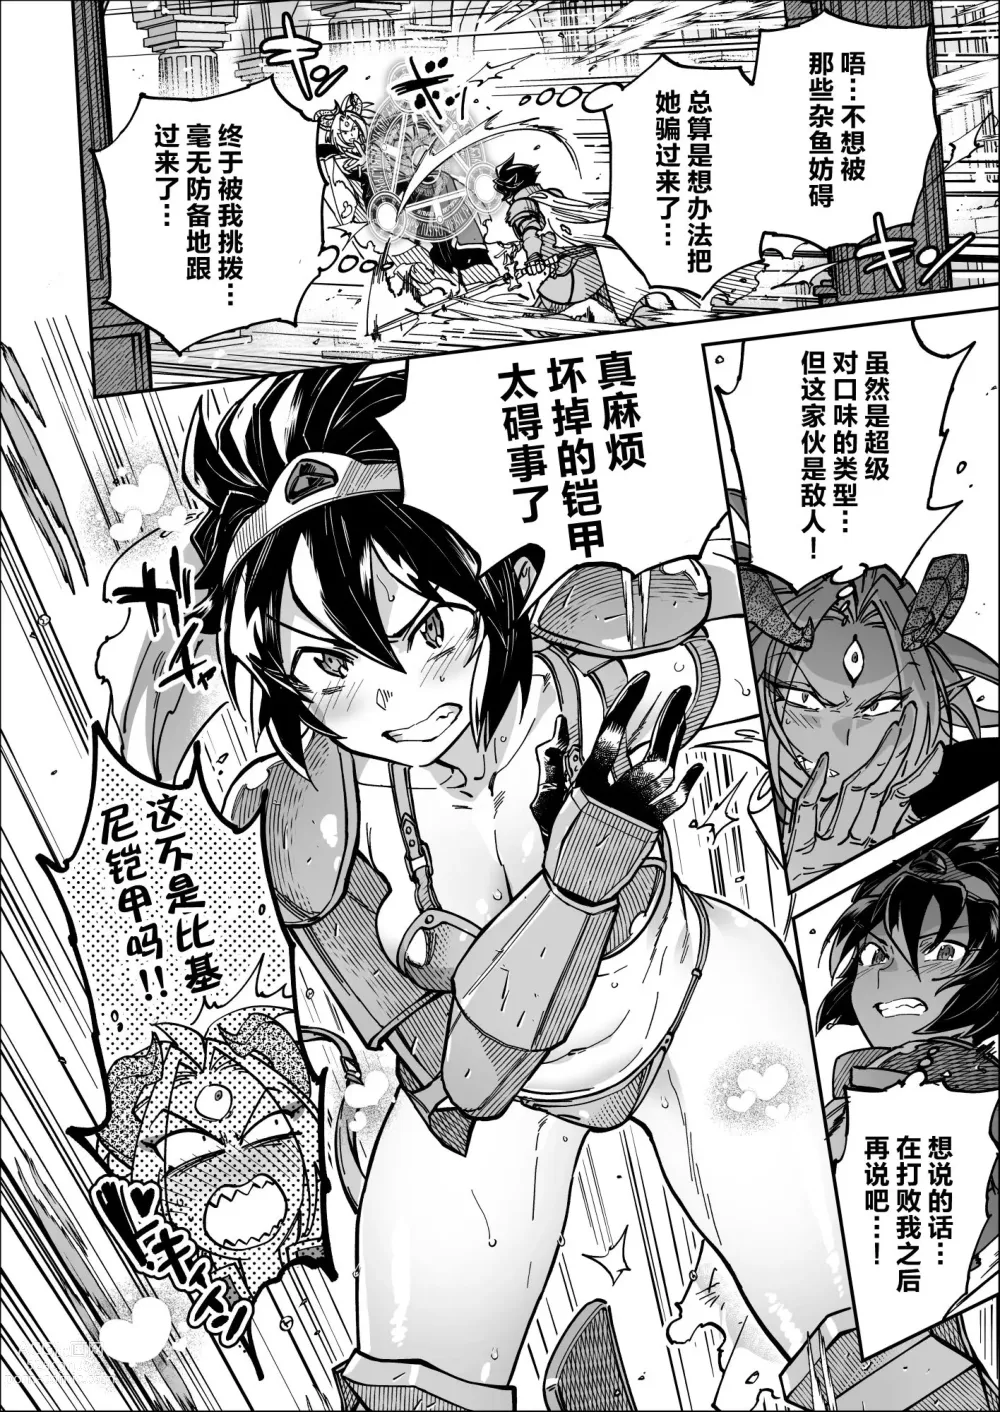 Page 6 of doujinshi 最终决战才见到对方正脸就恍神的勇者与魔王